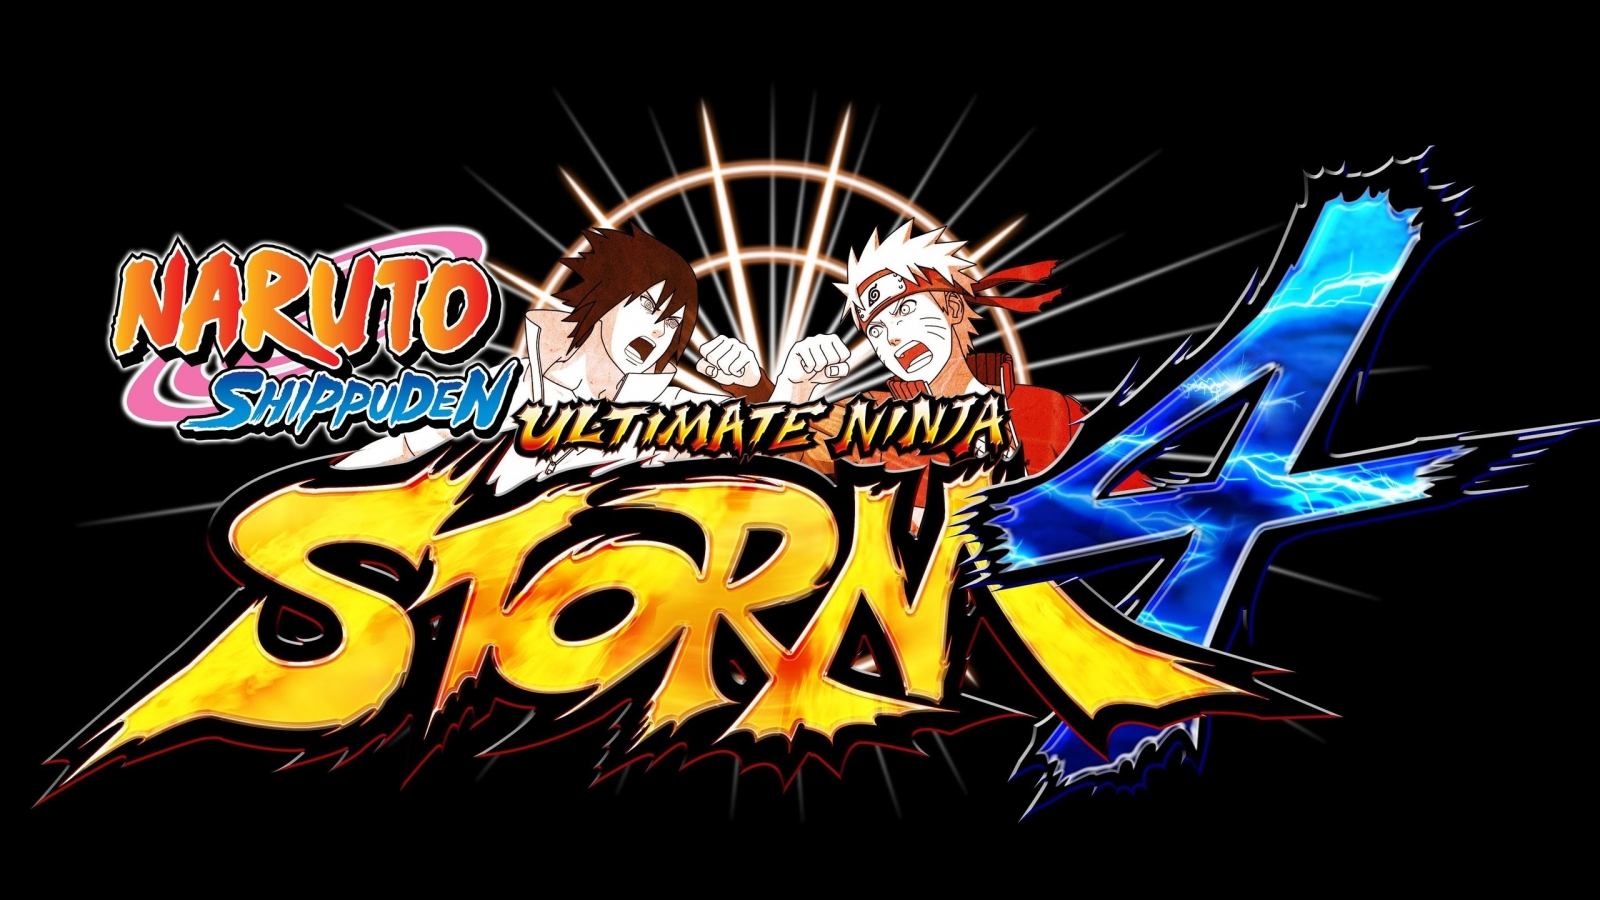 Naruto Shippuden Ultimate Ninja Storm 4 Poster for 1600 x 900 HDTV resolution